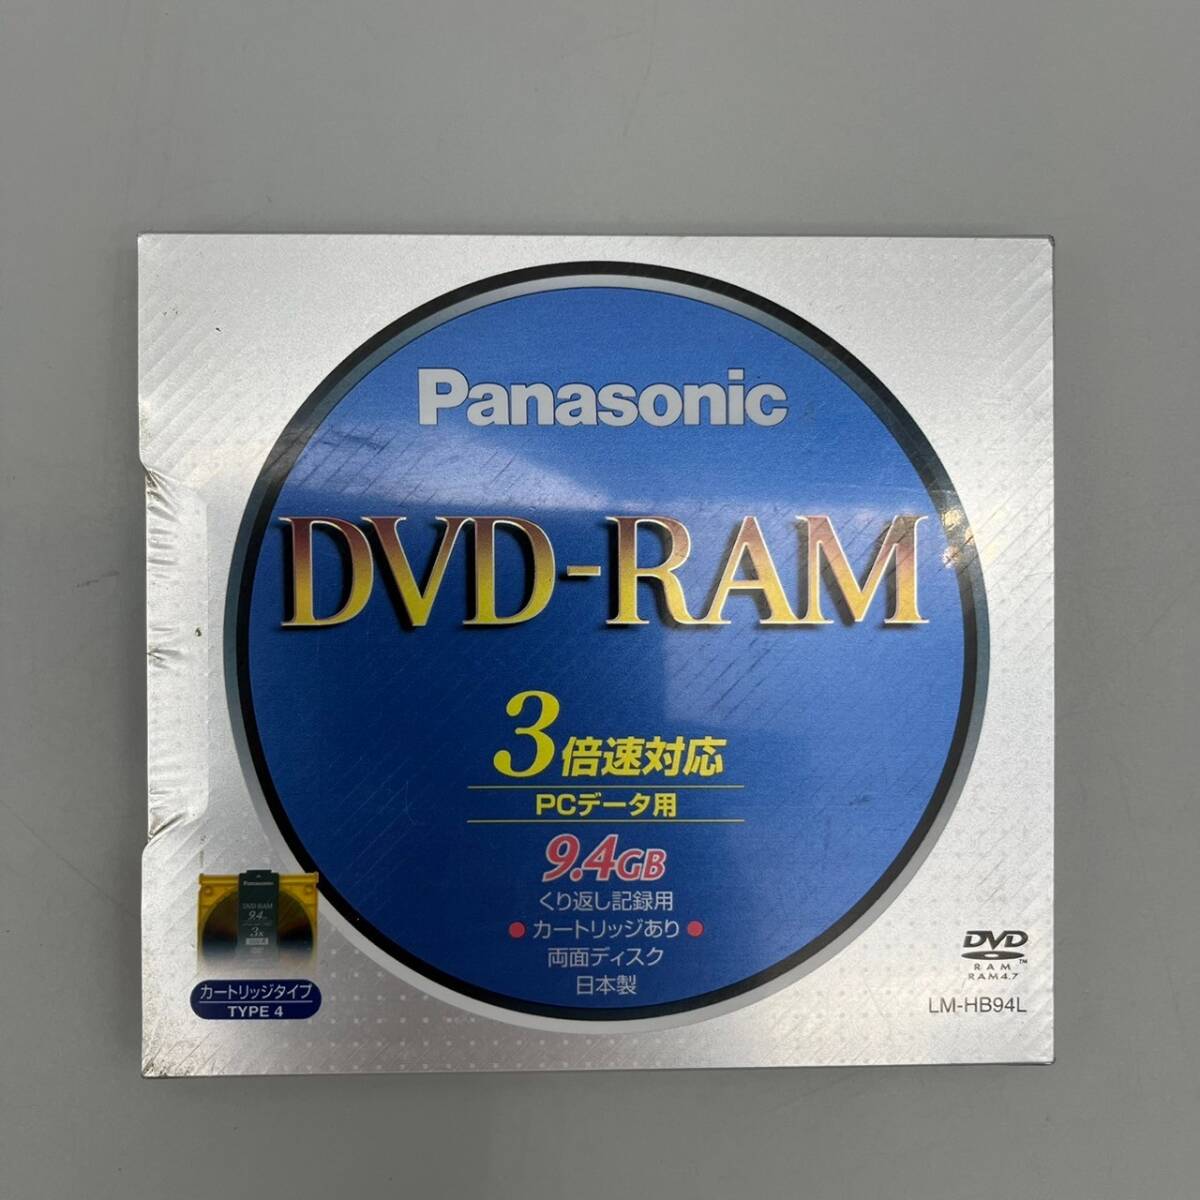 Panasonic Panasonic DVD-RAM LM-HB94L PC data for 3 speed correspondence both sides disk 9.4GB tube :050503